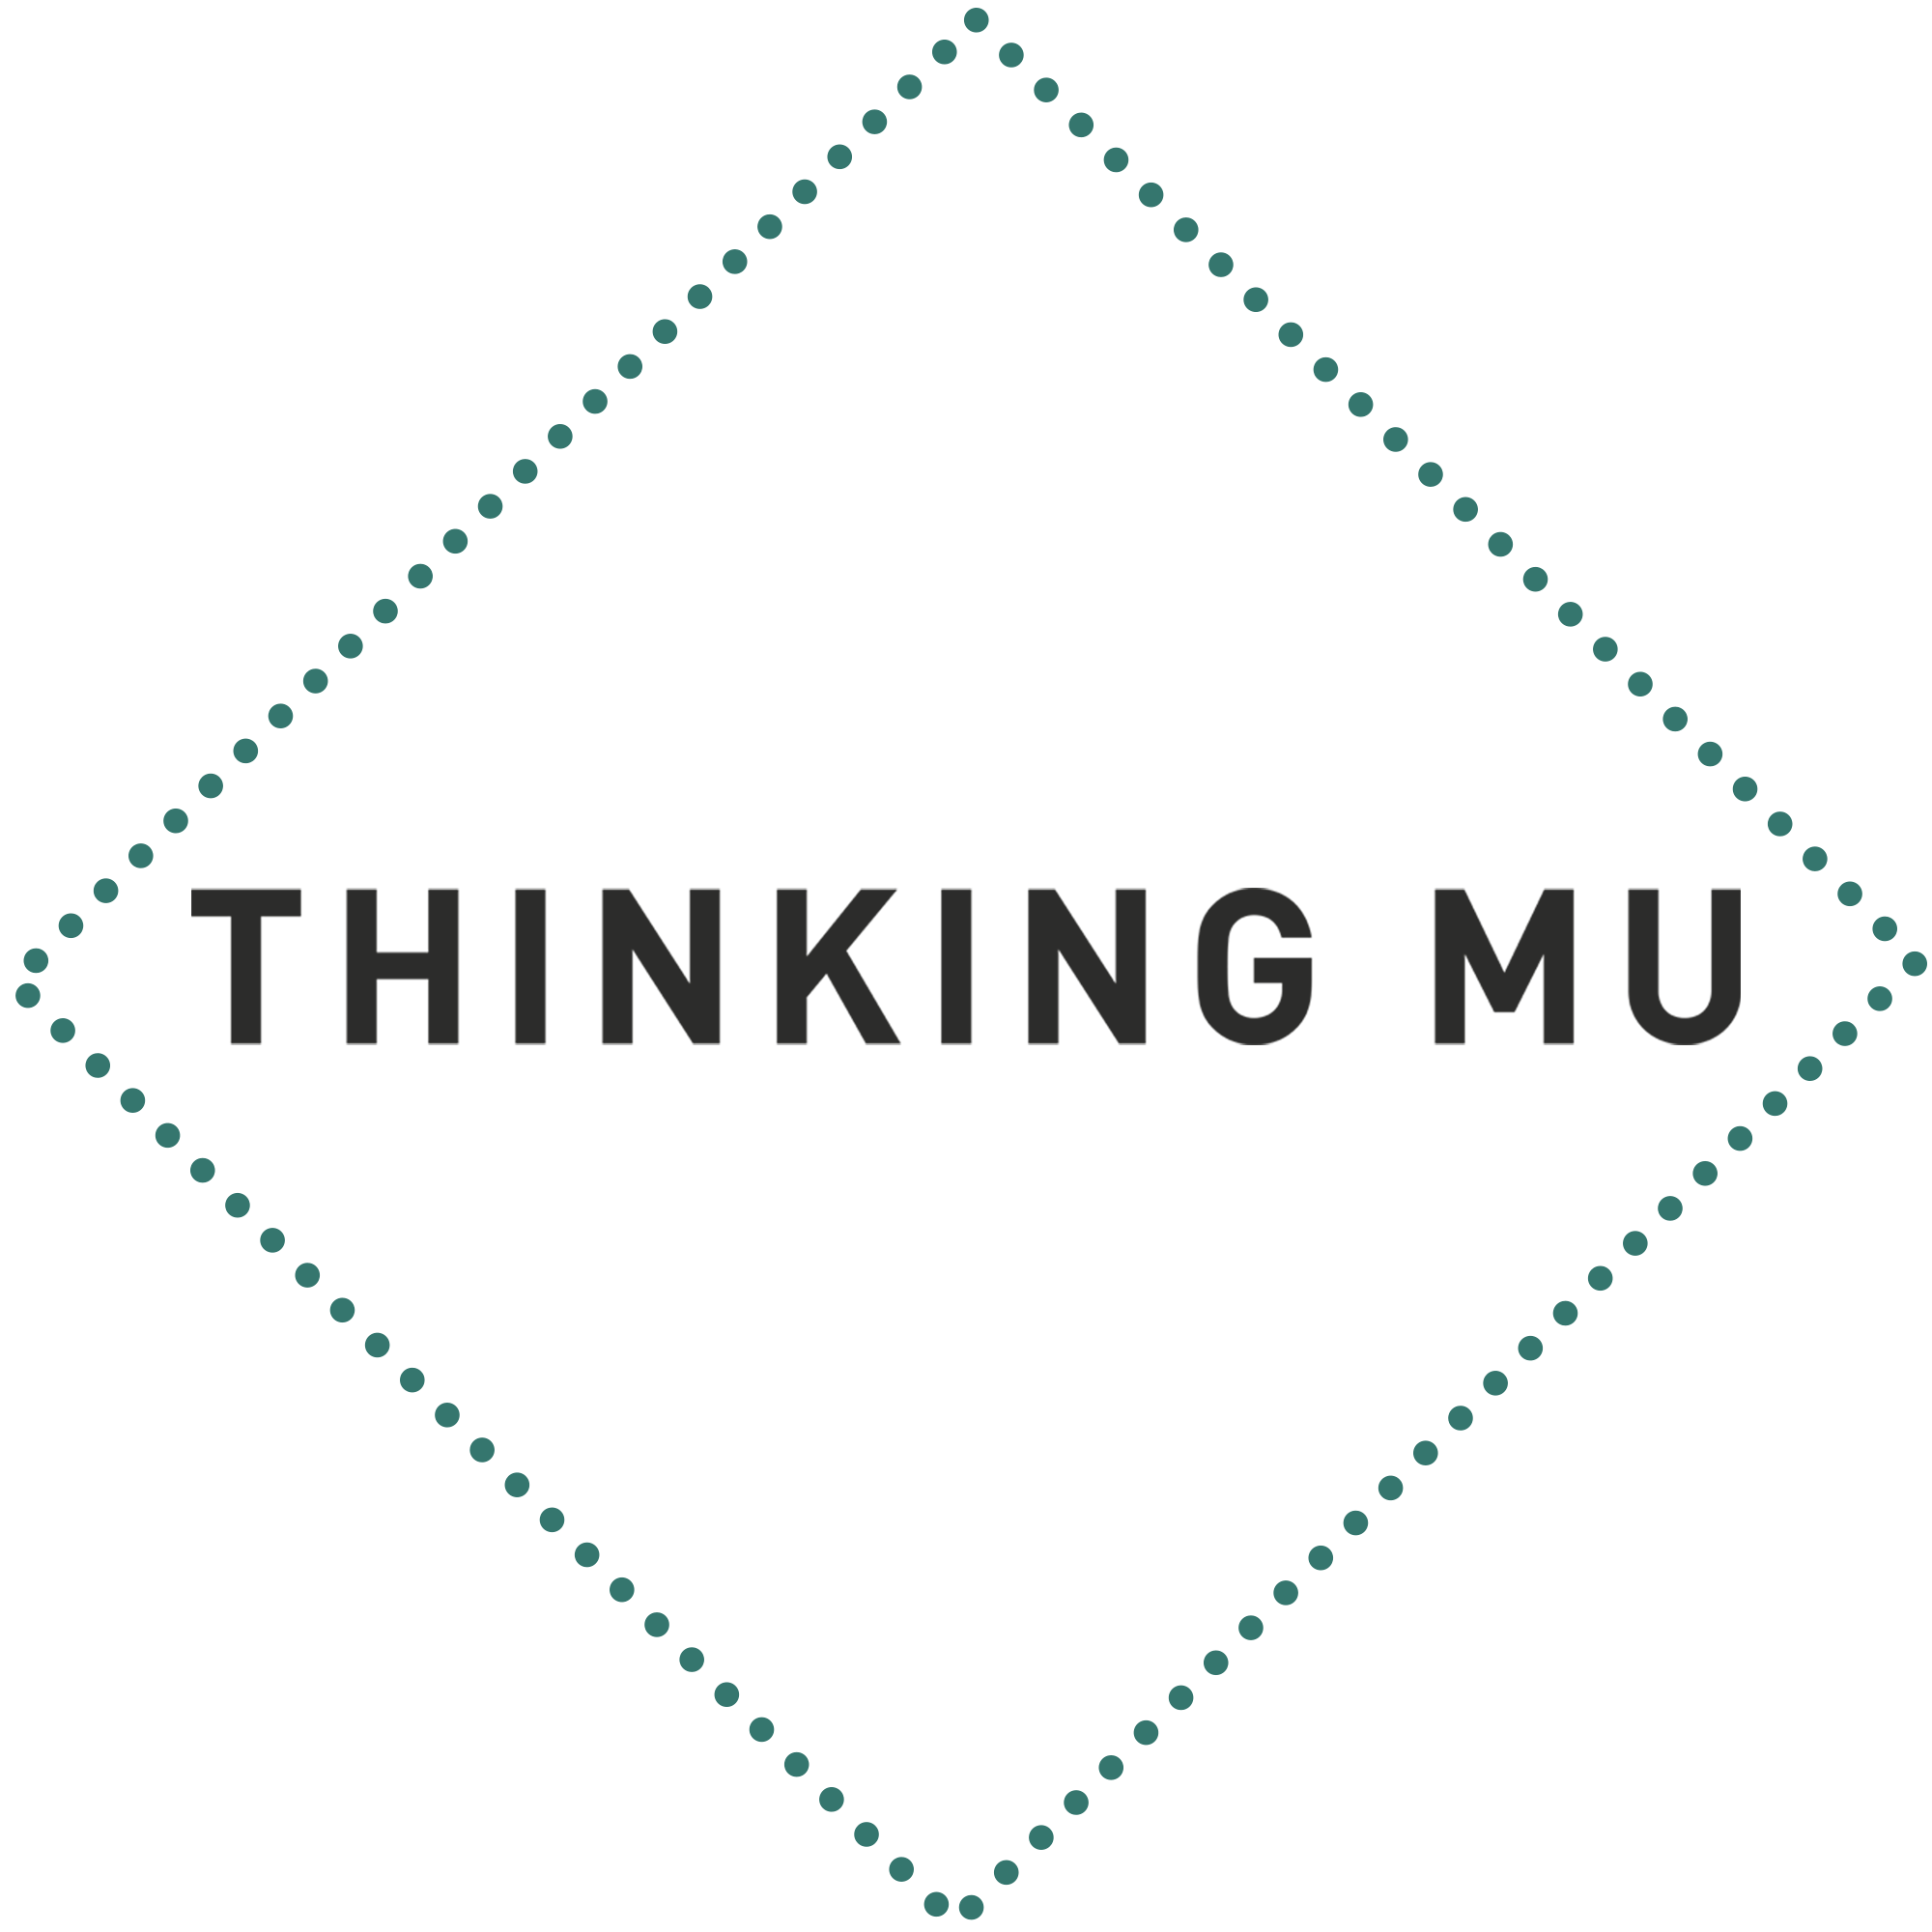 THINKING MU